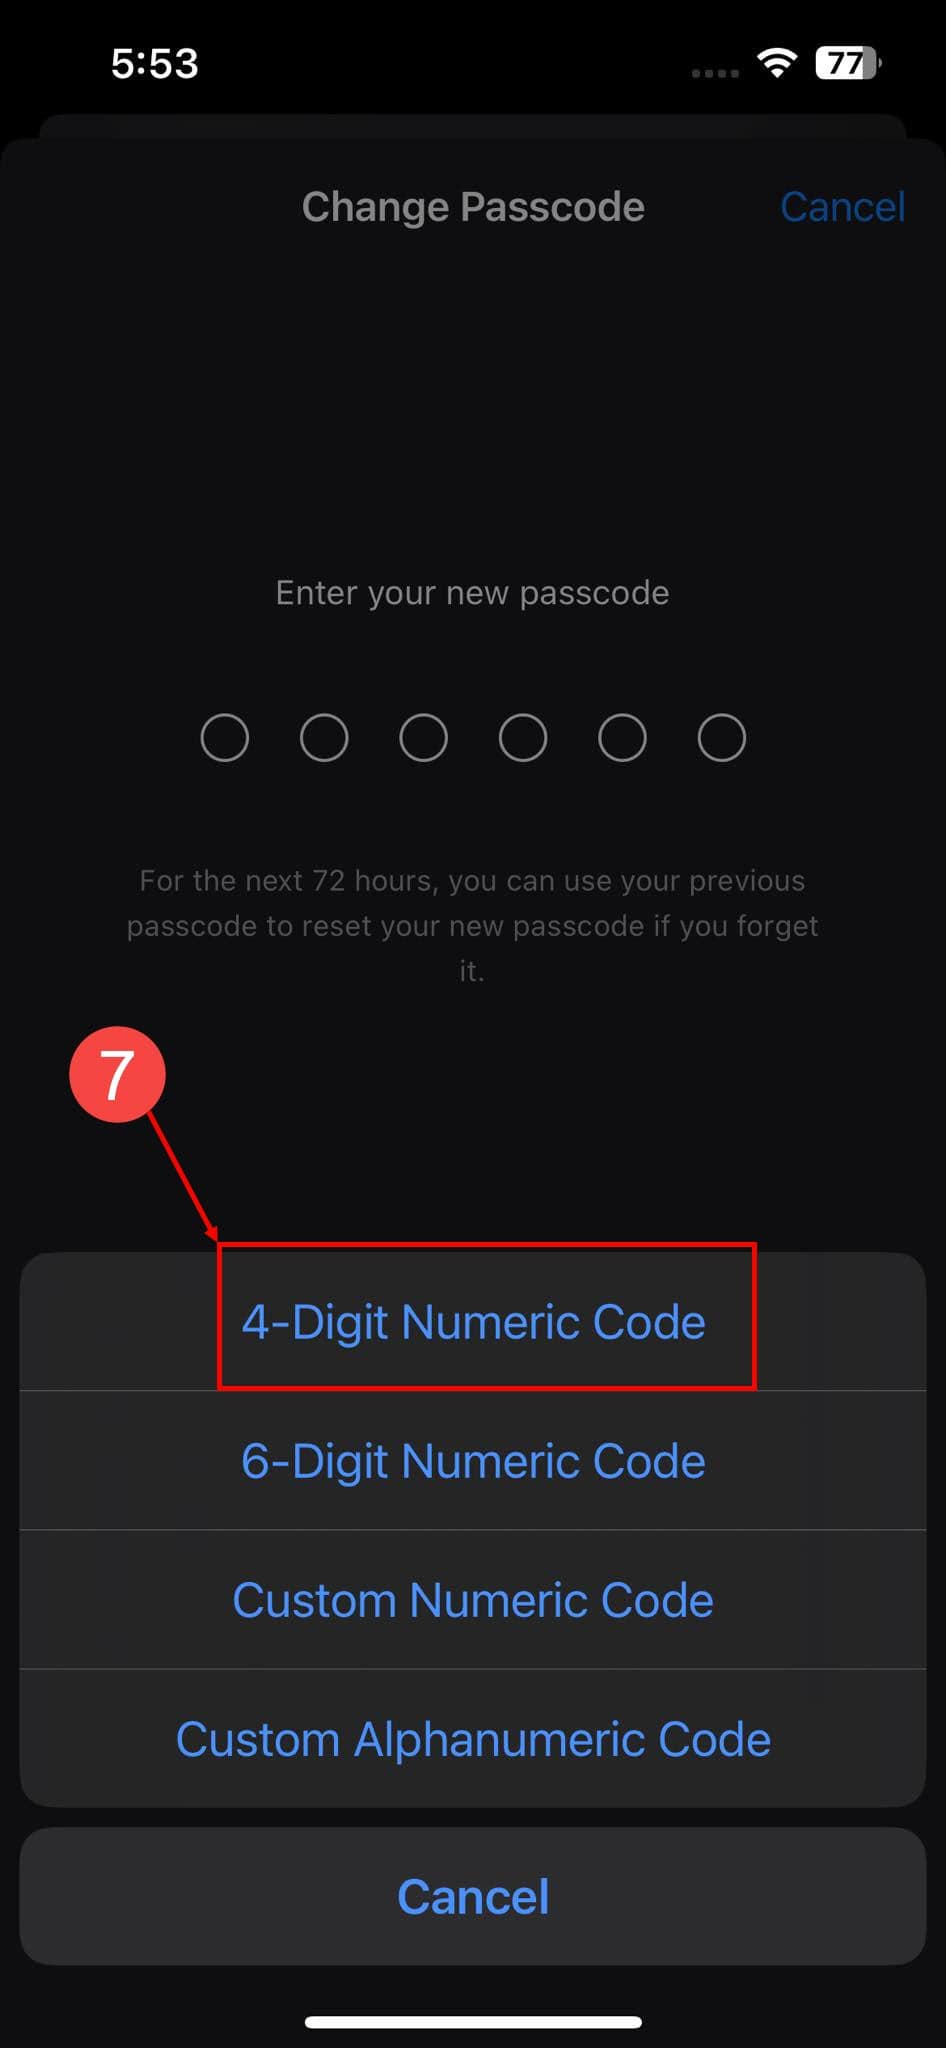 4-digit numeric code in change passcode